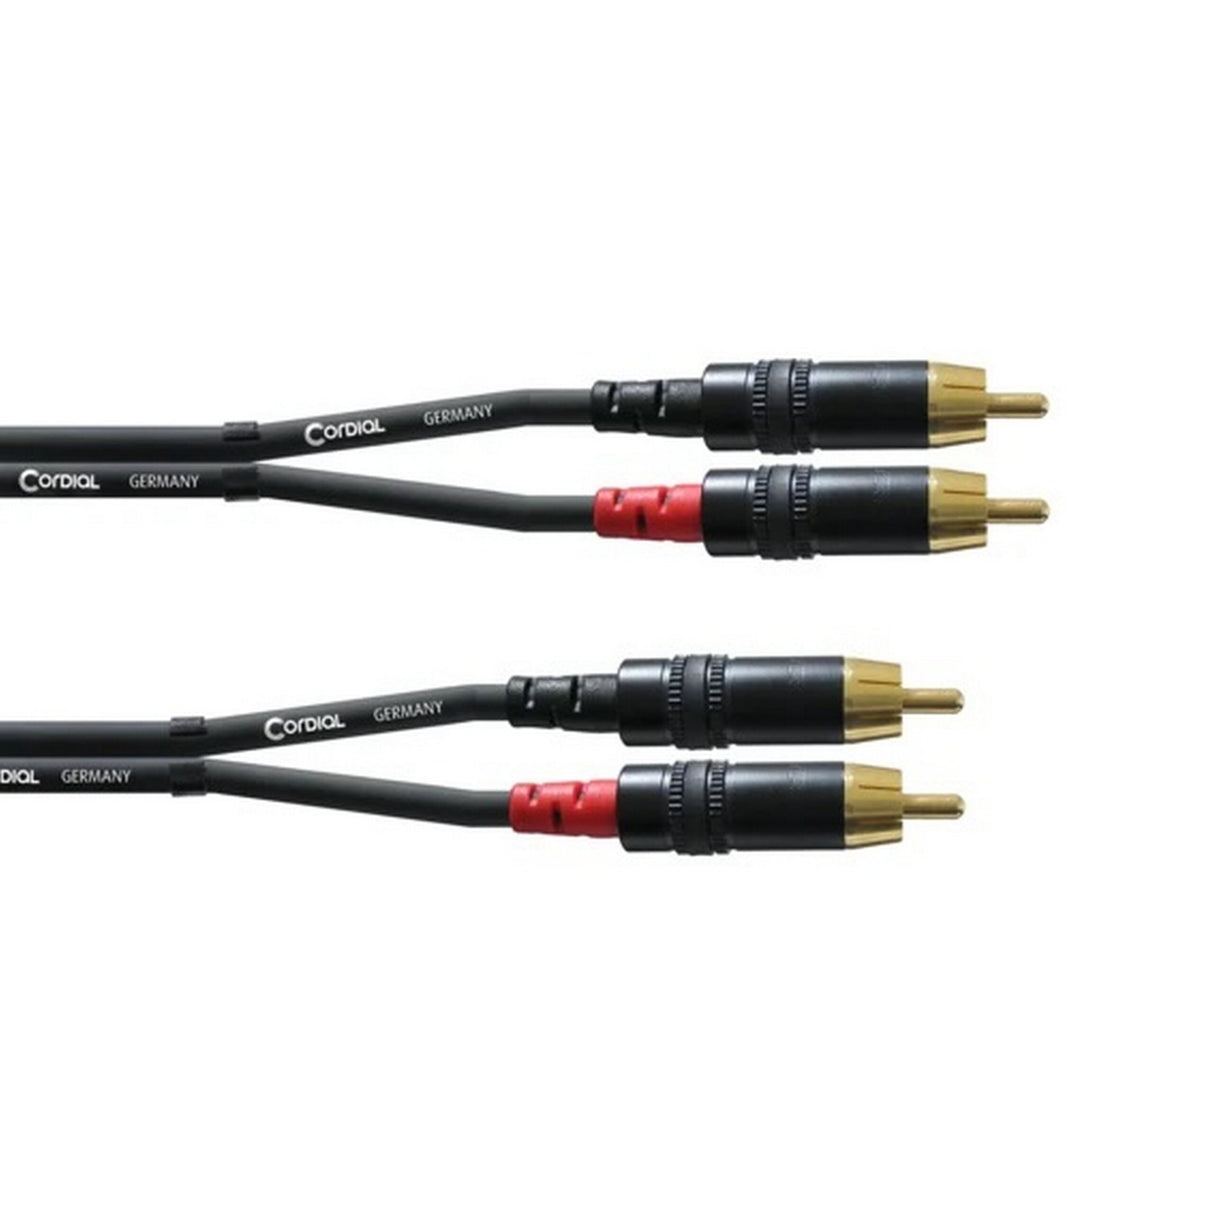 Cordial CFU 3 CC 2 x RCA to 2 x RCA Twin Cable/Adapter, Black, 10-Feet